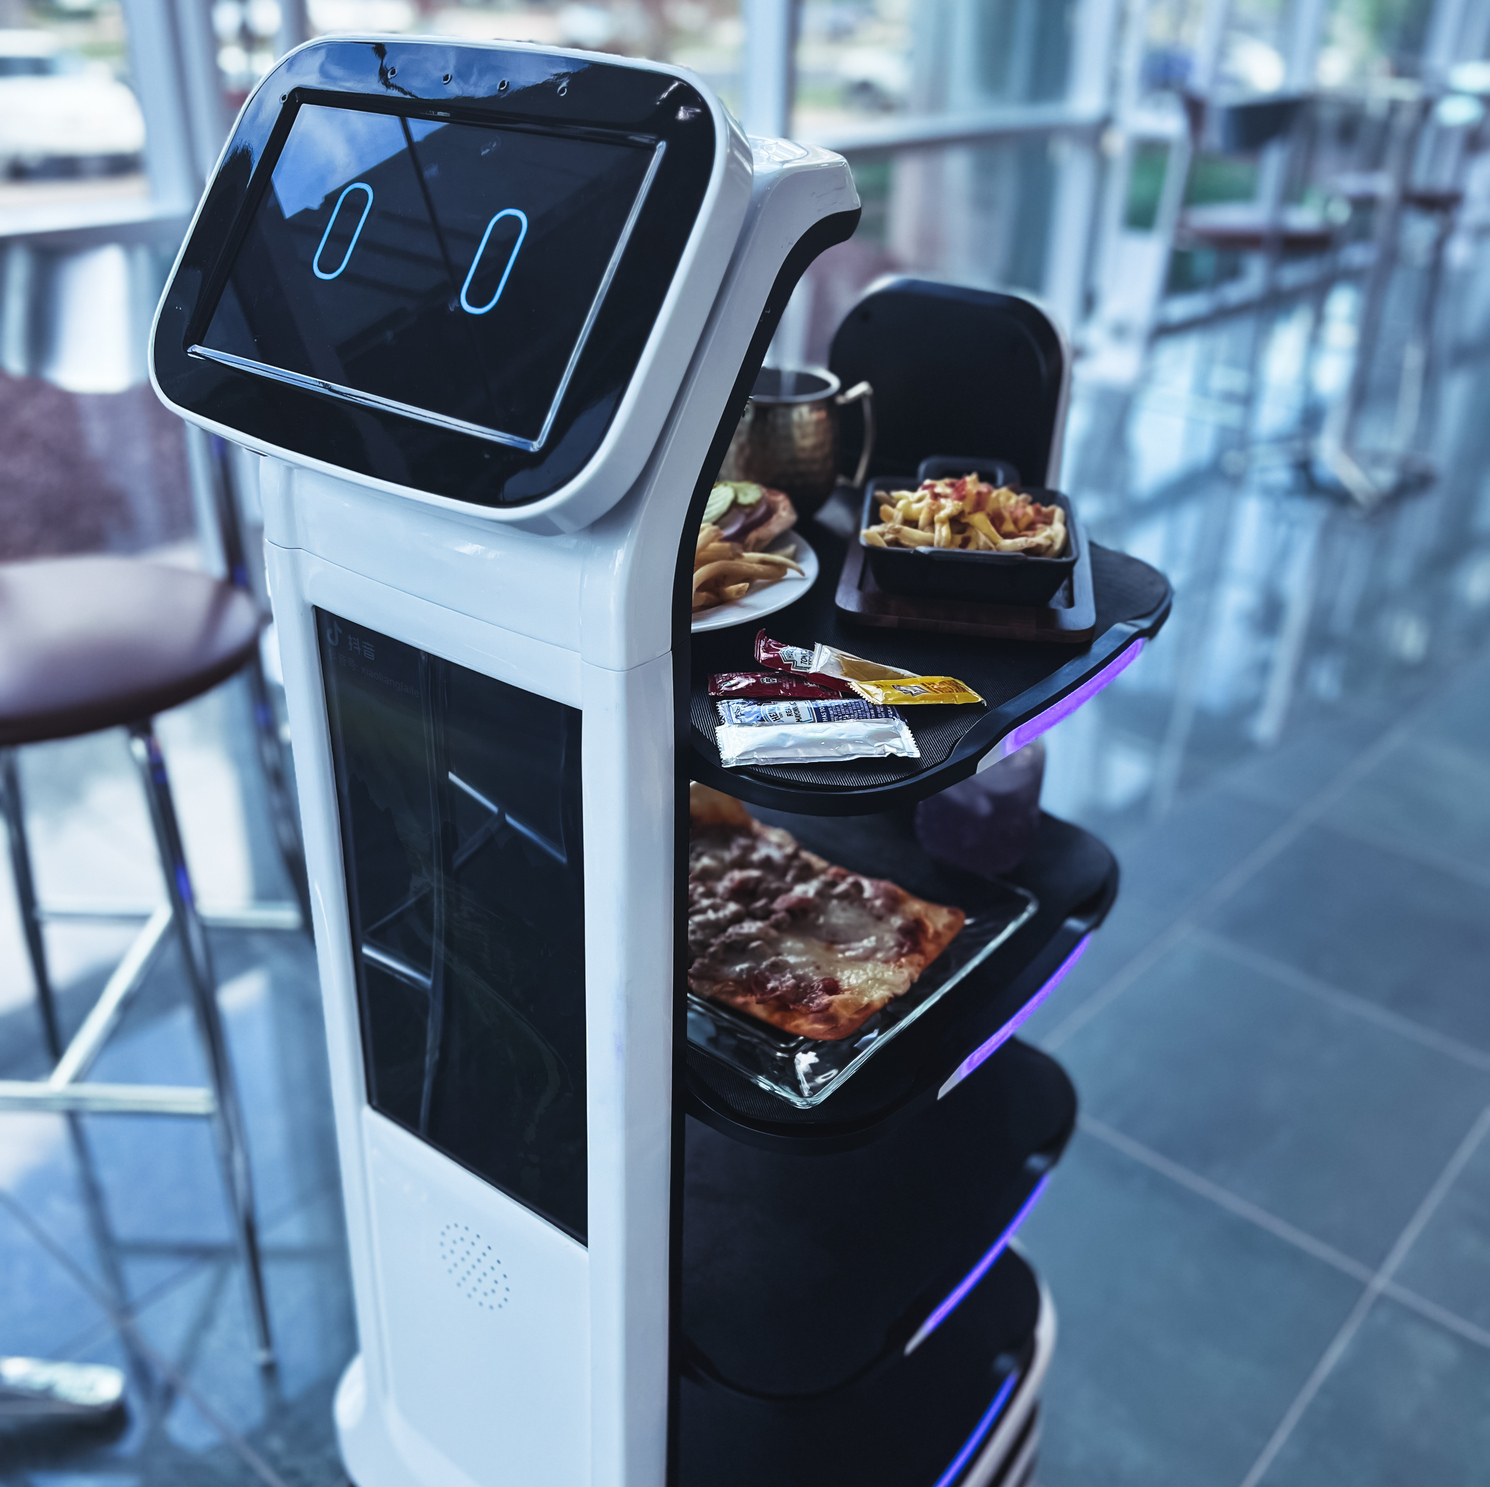 waiter robot bringing food to restaurant guests